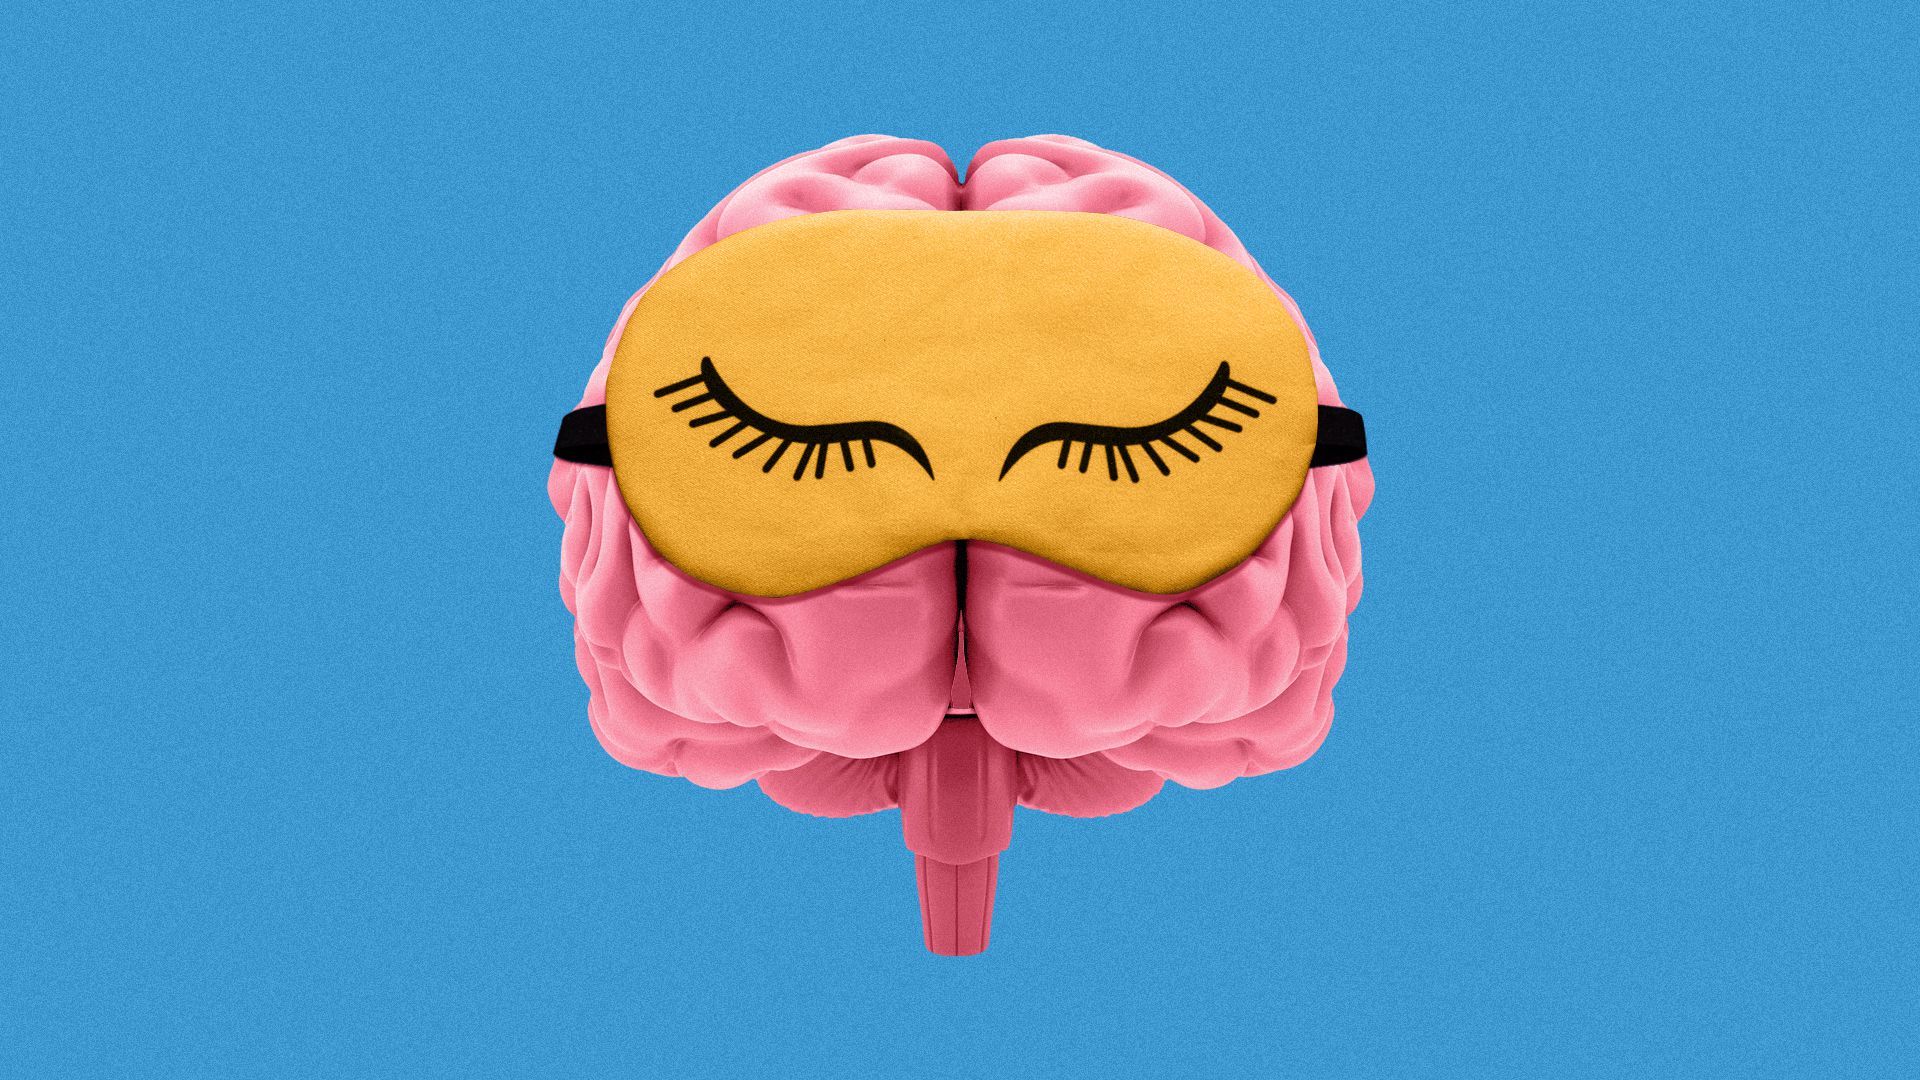 Illustration of a brain wearing a sleep mask